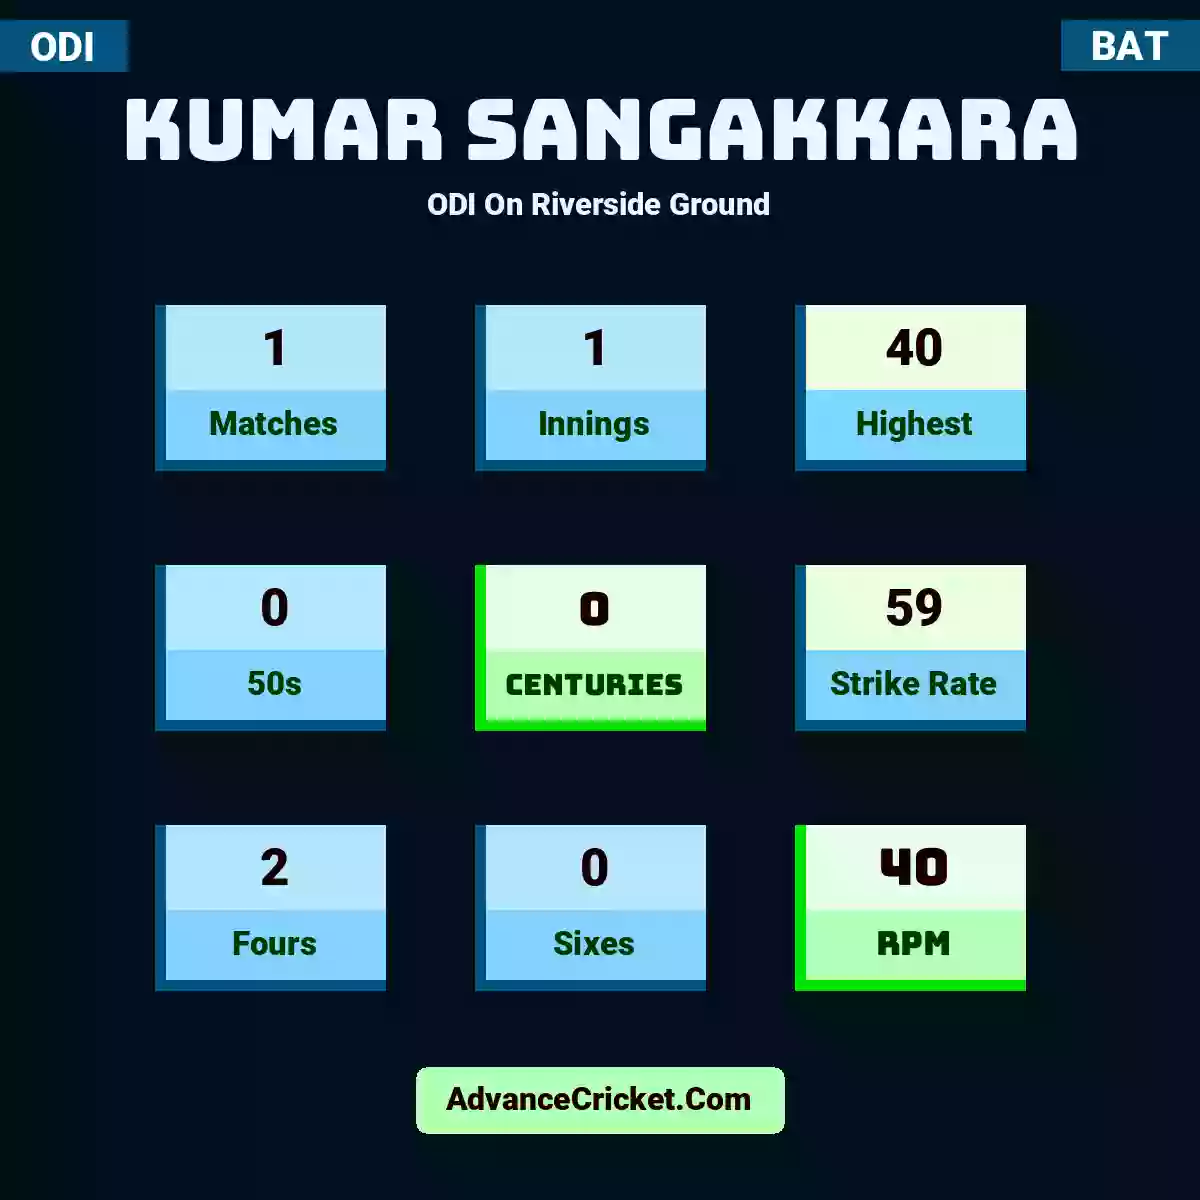 Kumar Sangakkara ODI  On Riverside Ground, Kumar Sangakkara played 1 matches, scored 40 runs as highest, 0 half-centuries, and 0 centuries, with a strike rate of 59. K.Sangakkara hit 2 fours and 0 sixes, with an RPM of 40.